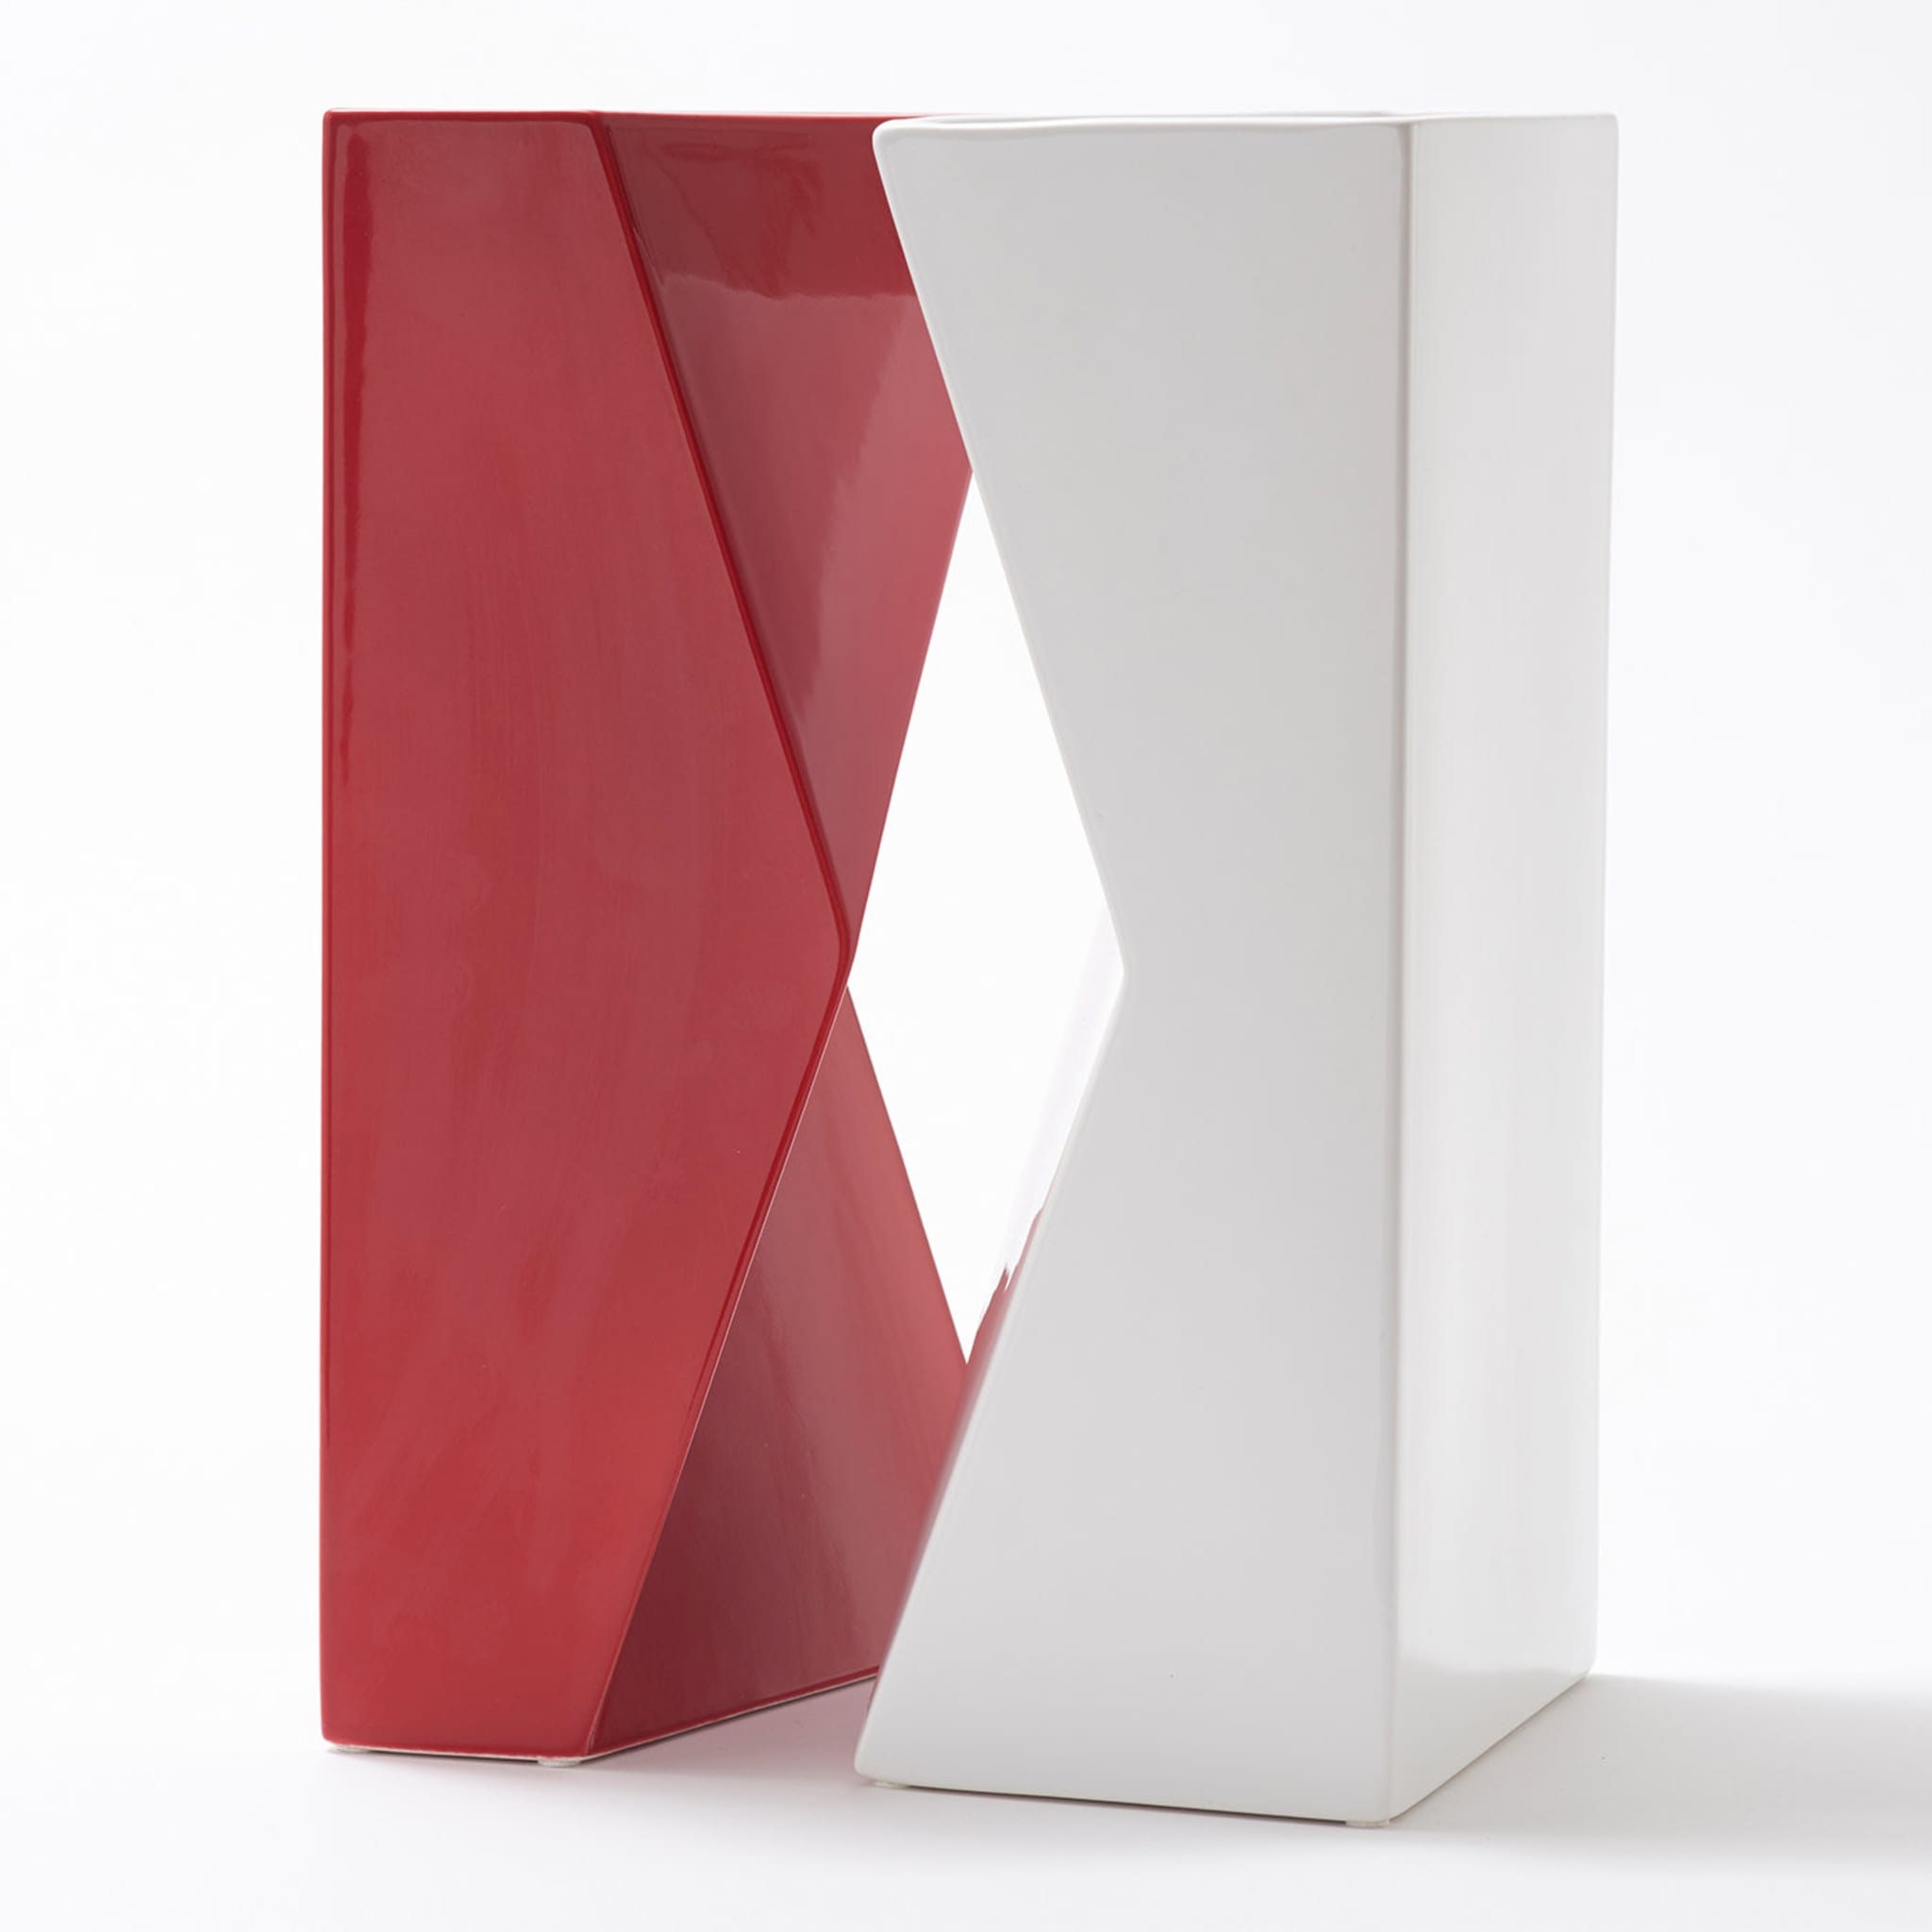 Verso Set of 2 Red and White Vases by Antonio Saporito - Alternative view 3